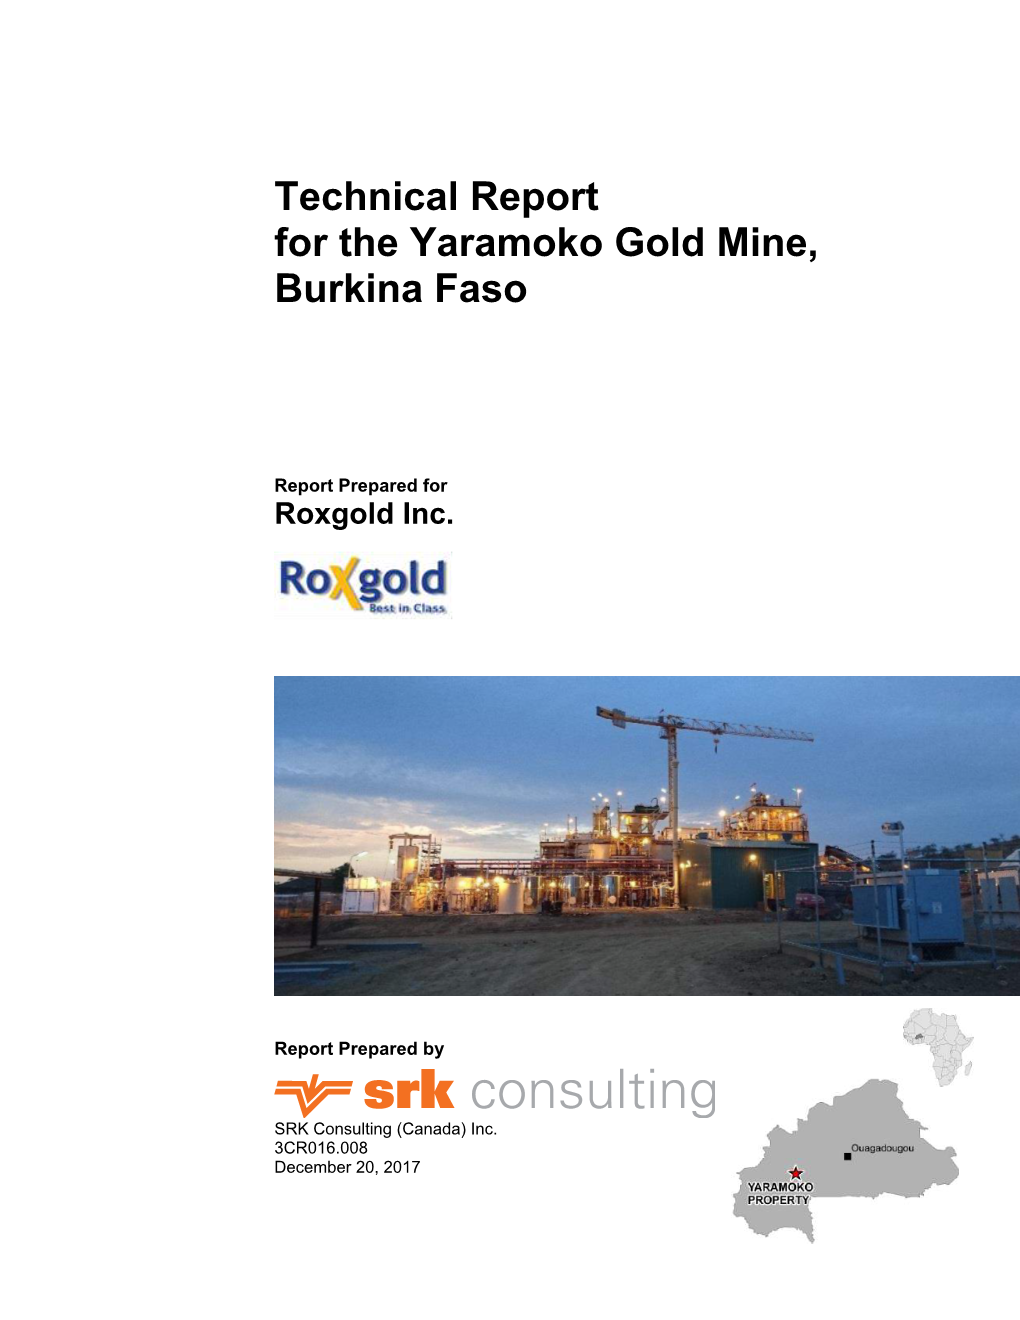 Technical Report for the Yaramoko Gold Mine, Burkina Faso